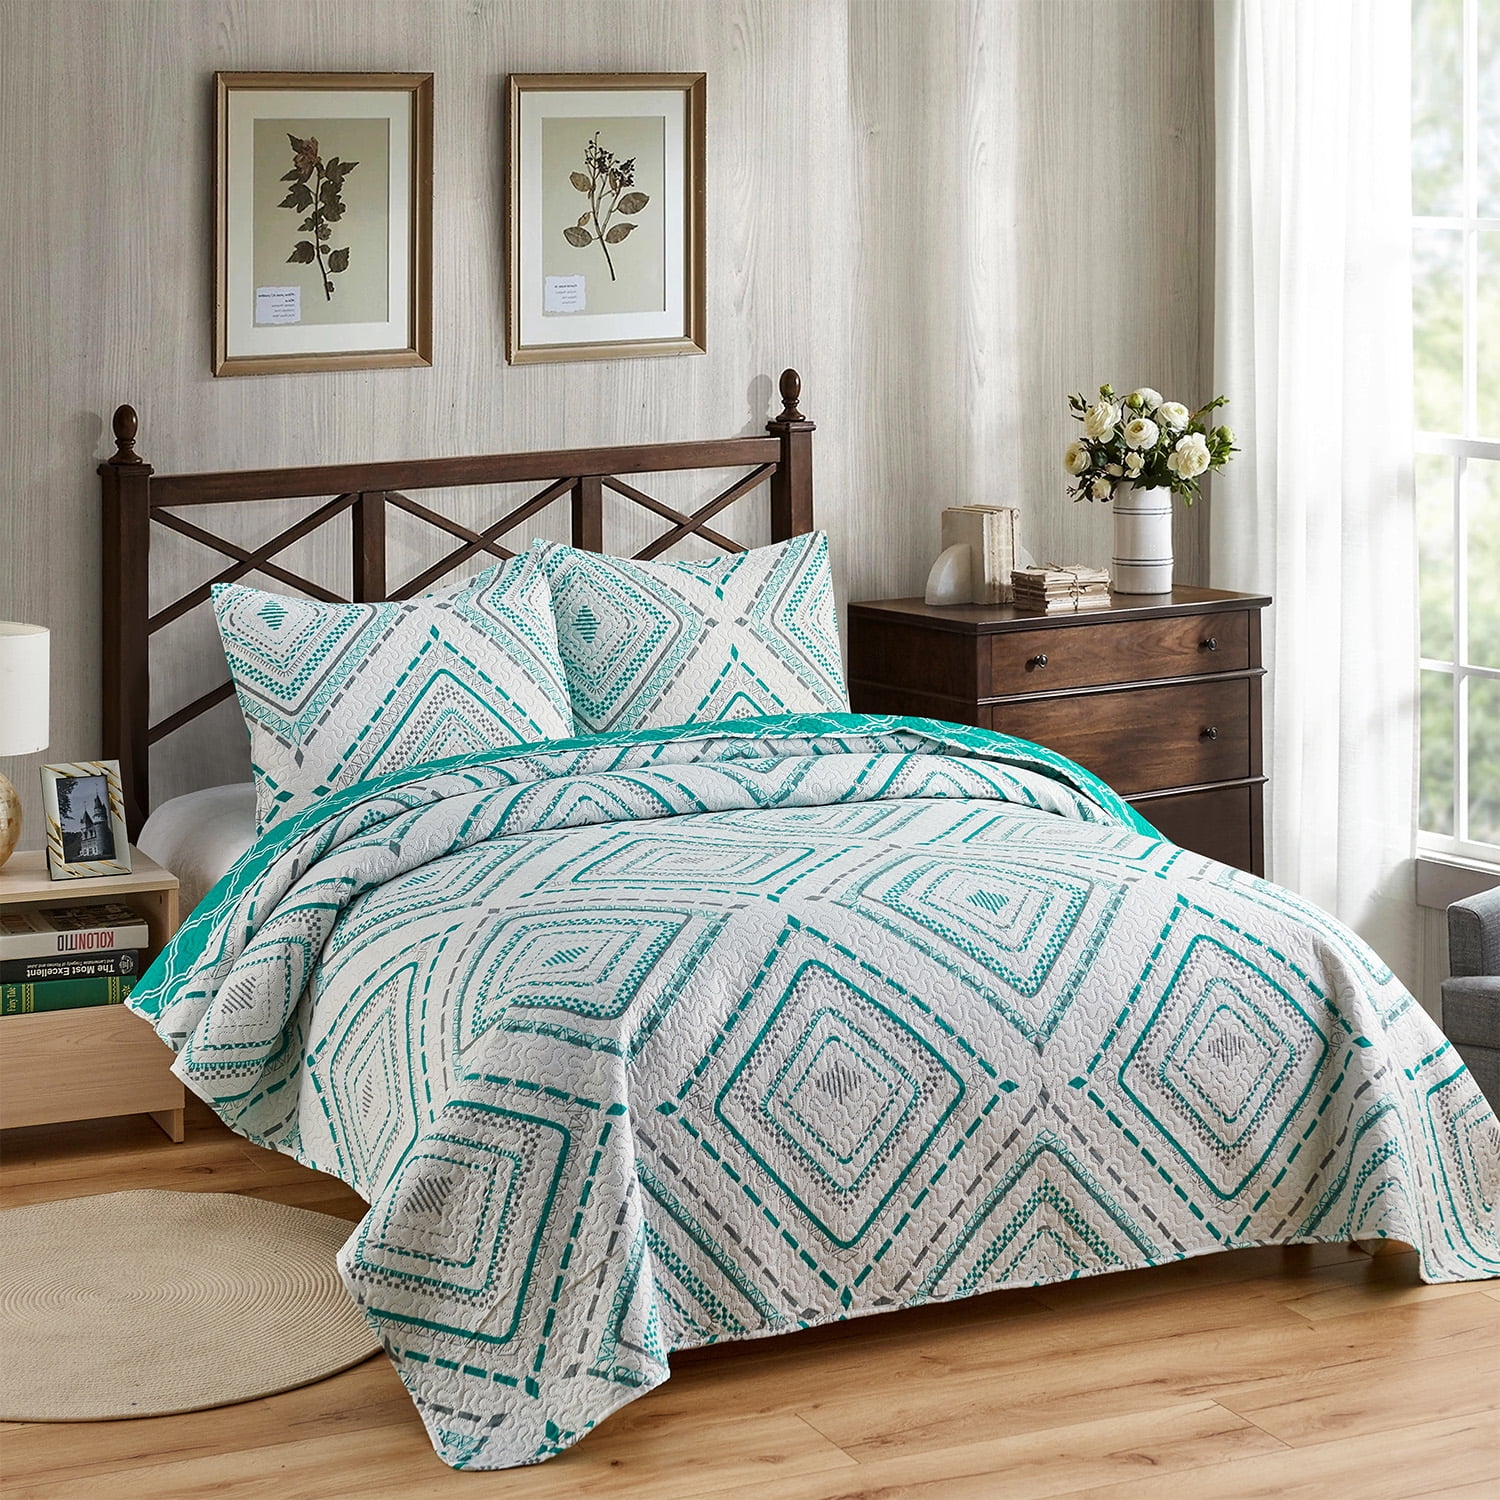 Details about   3-Piece Bedspread Coverlet Set Quilt Set Solid Color Queen/King Size 